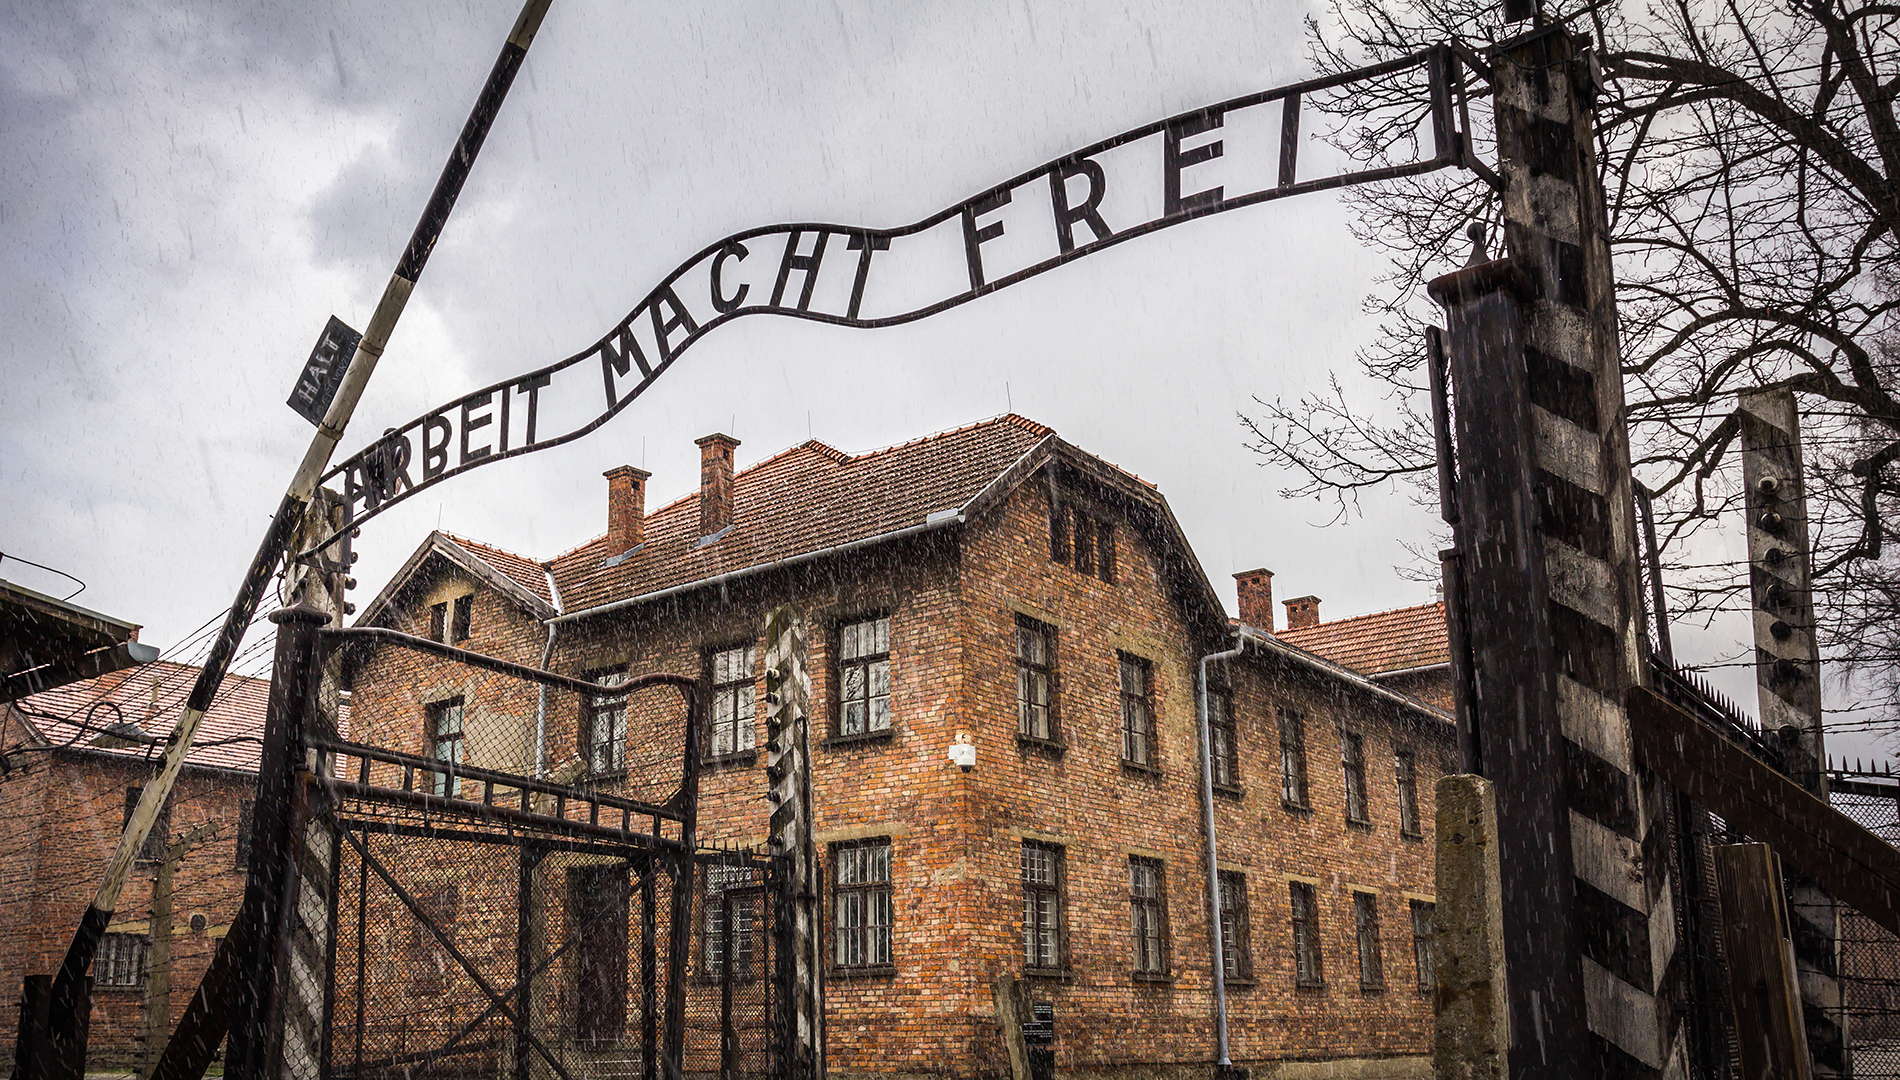 ARBEIT MACHT FREI, Auschwitz Concentration Camp, Oswiecim, Lesser Poland, Poland, April 2015